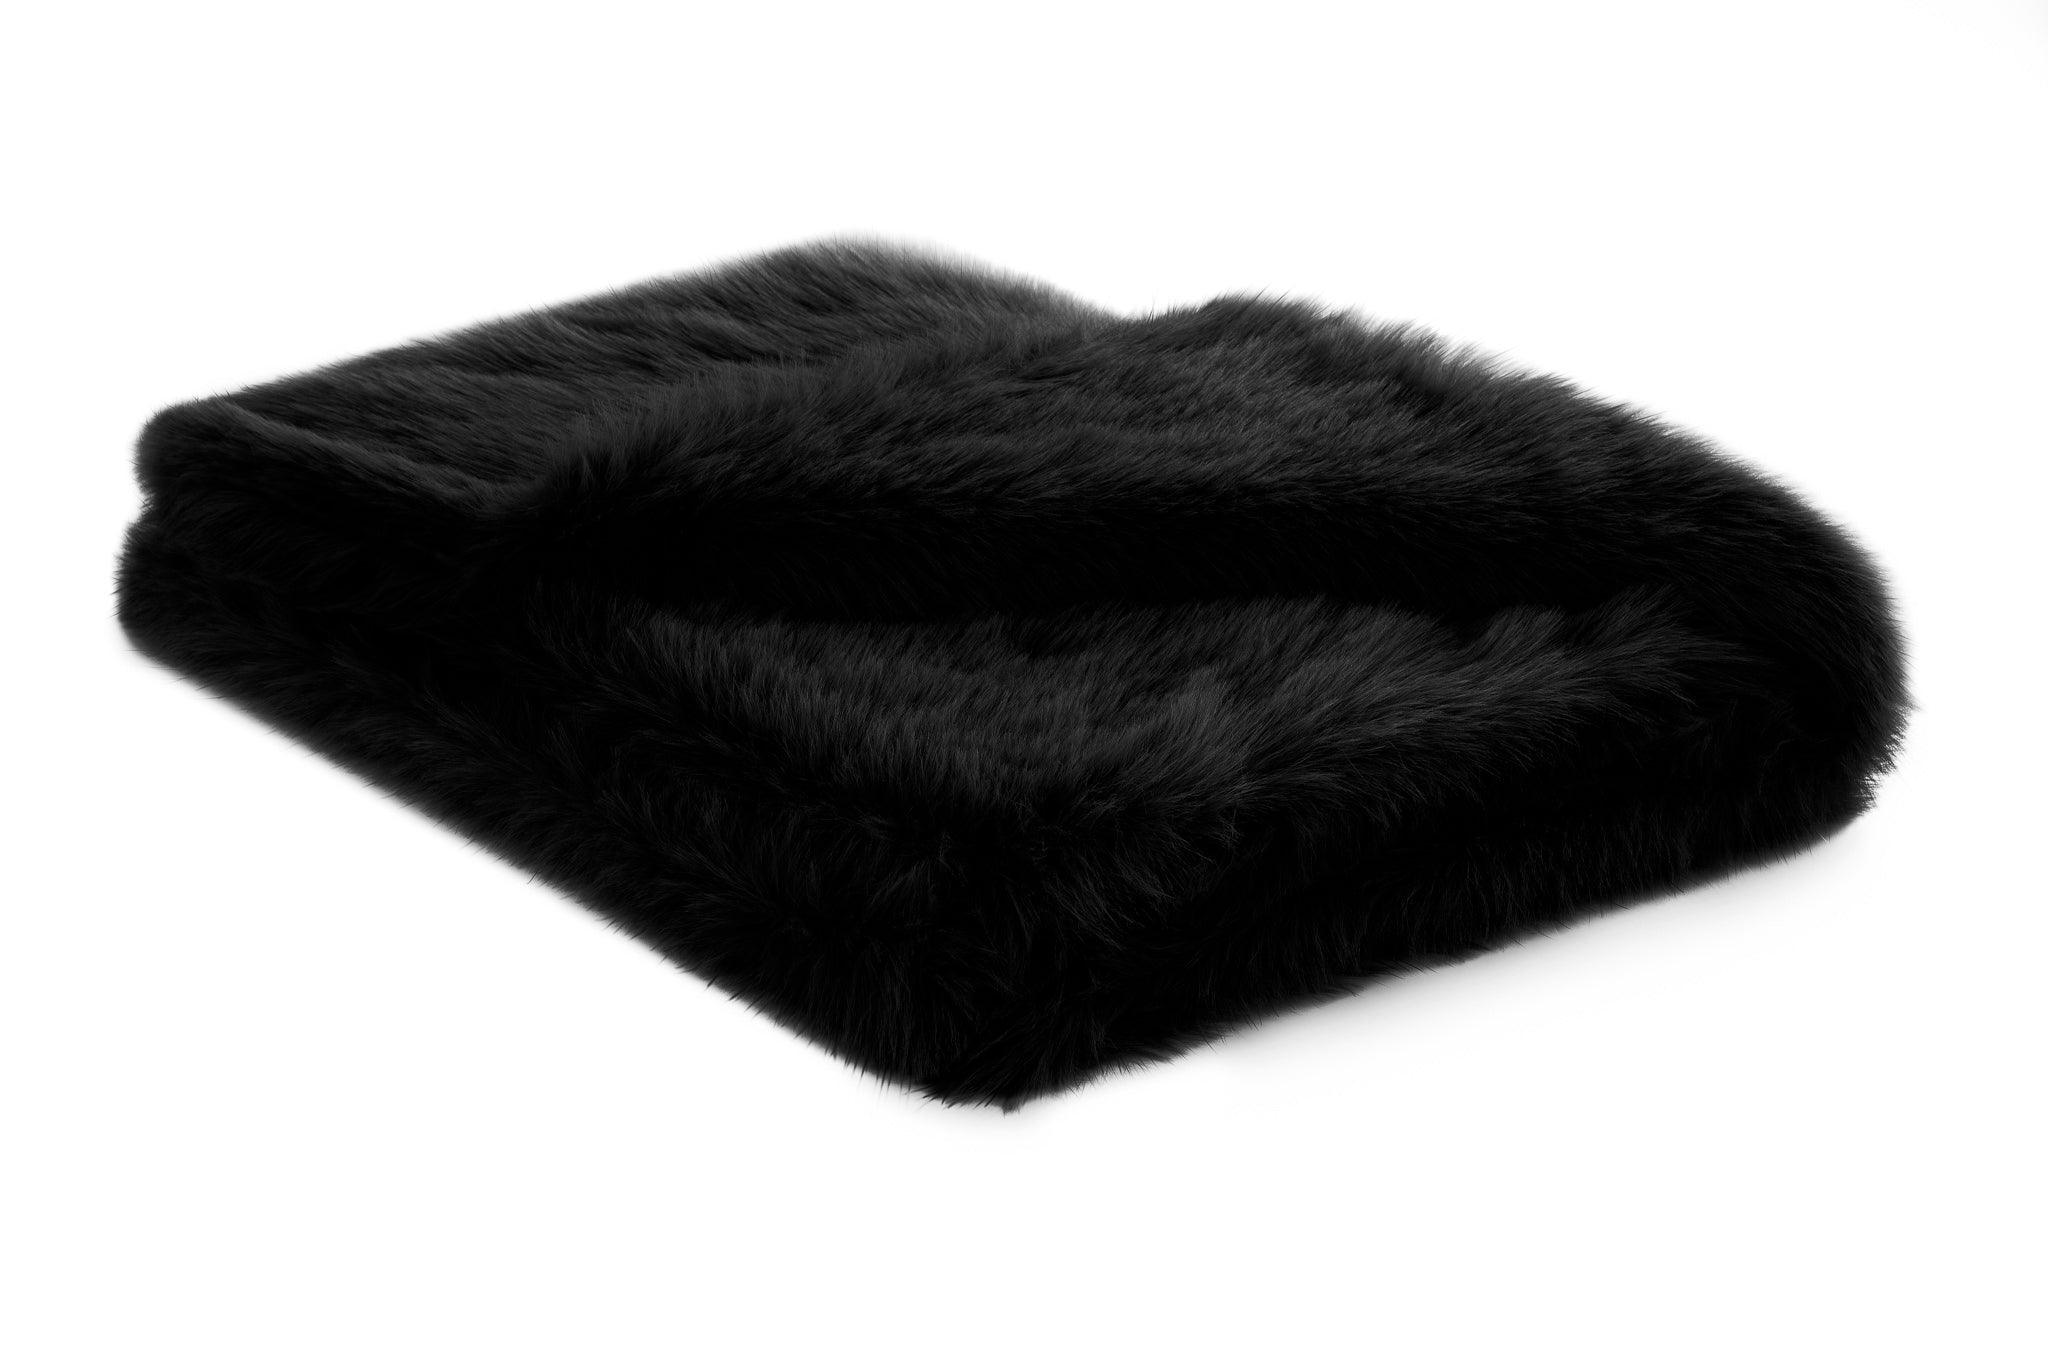 Plaid Perle Black is Black - Fake Fur